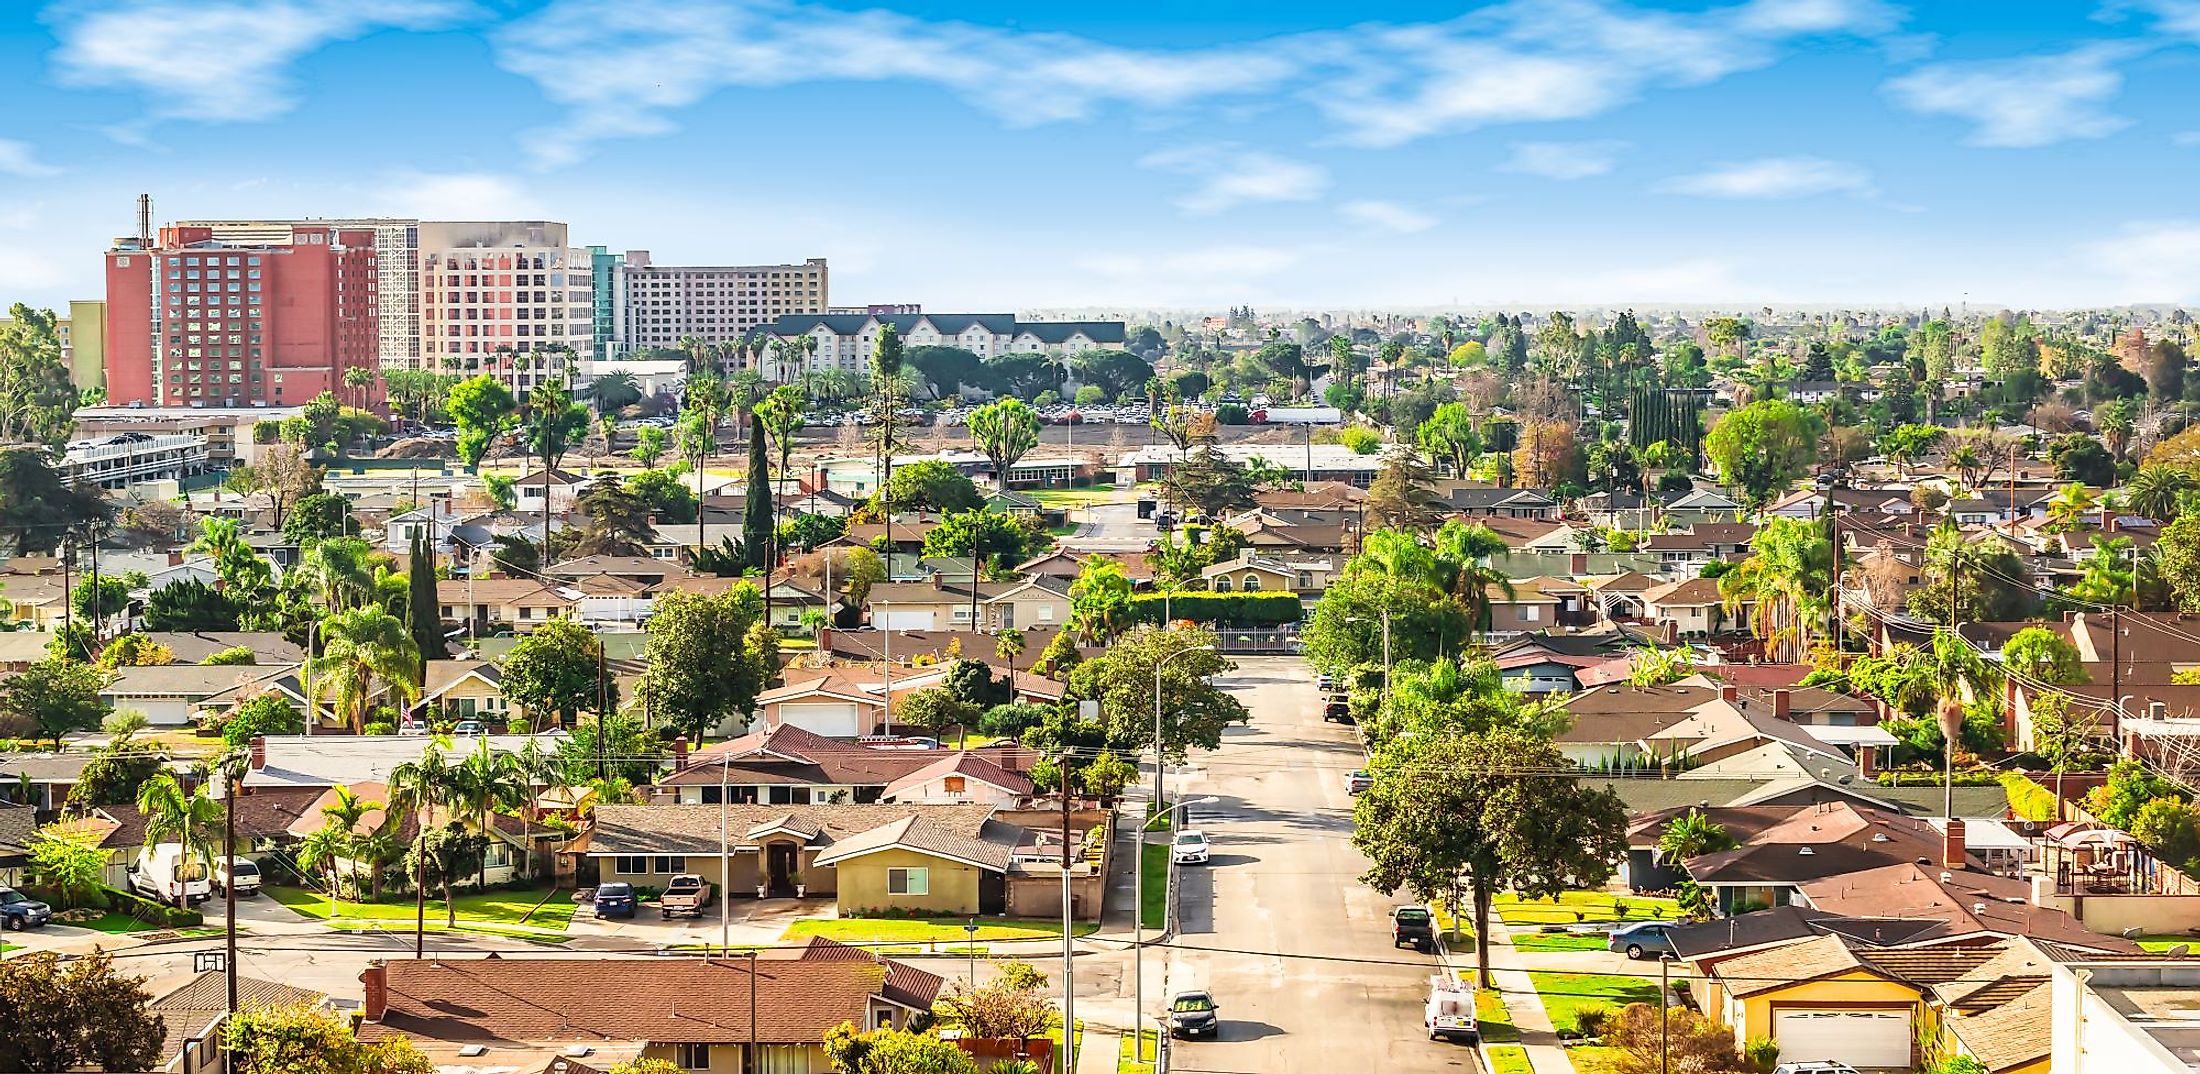 Panoramic view of a neighborhood in Anaheim, Orange County, California. 